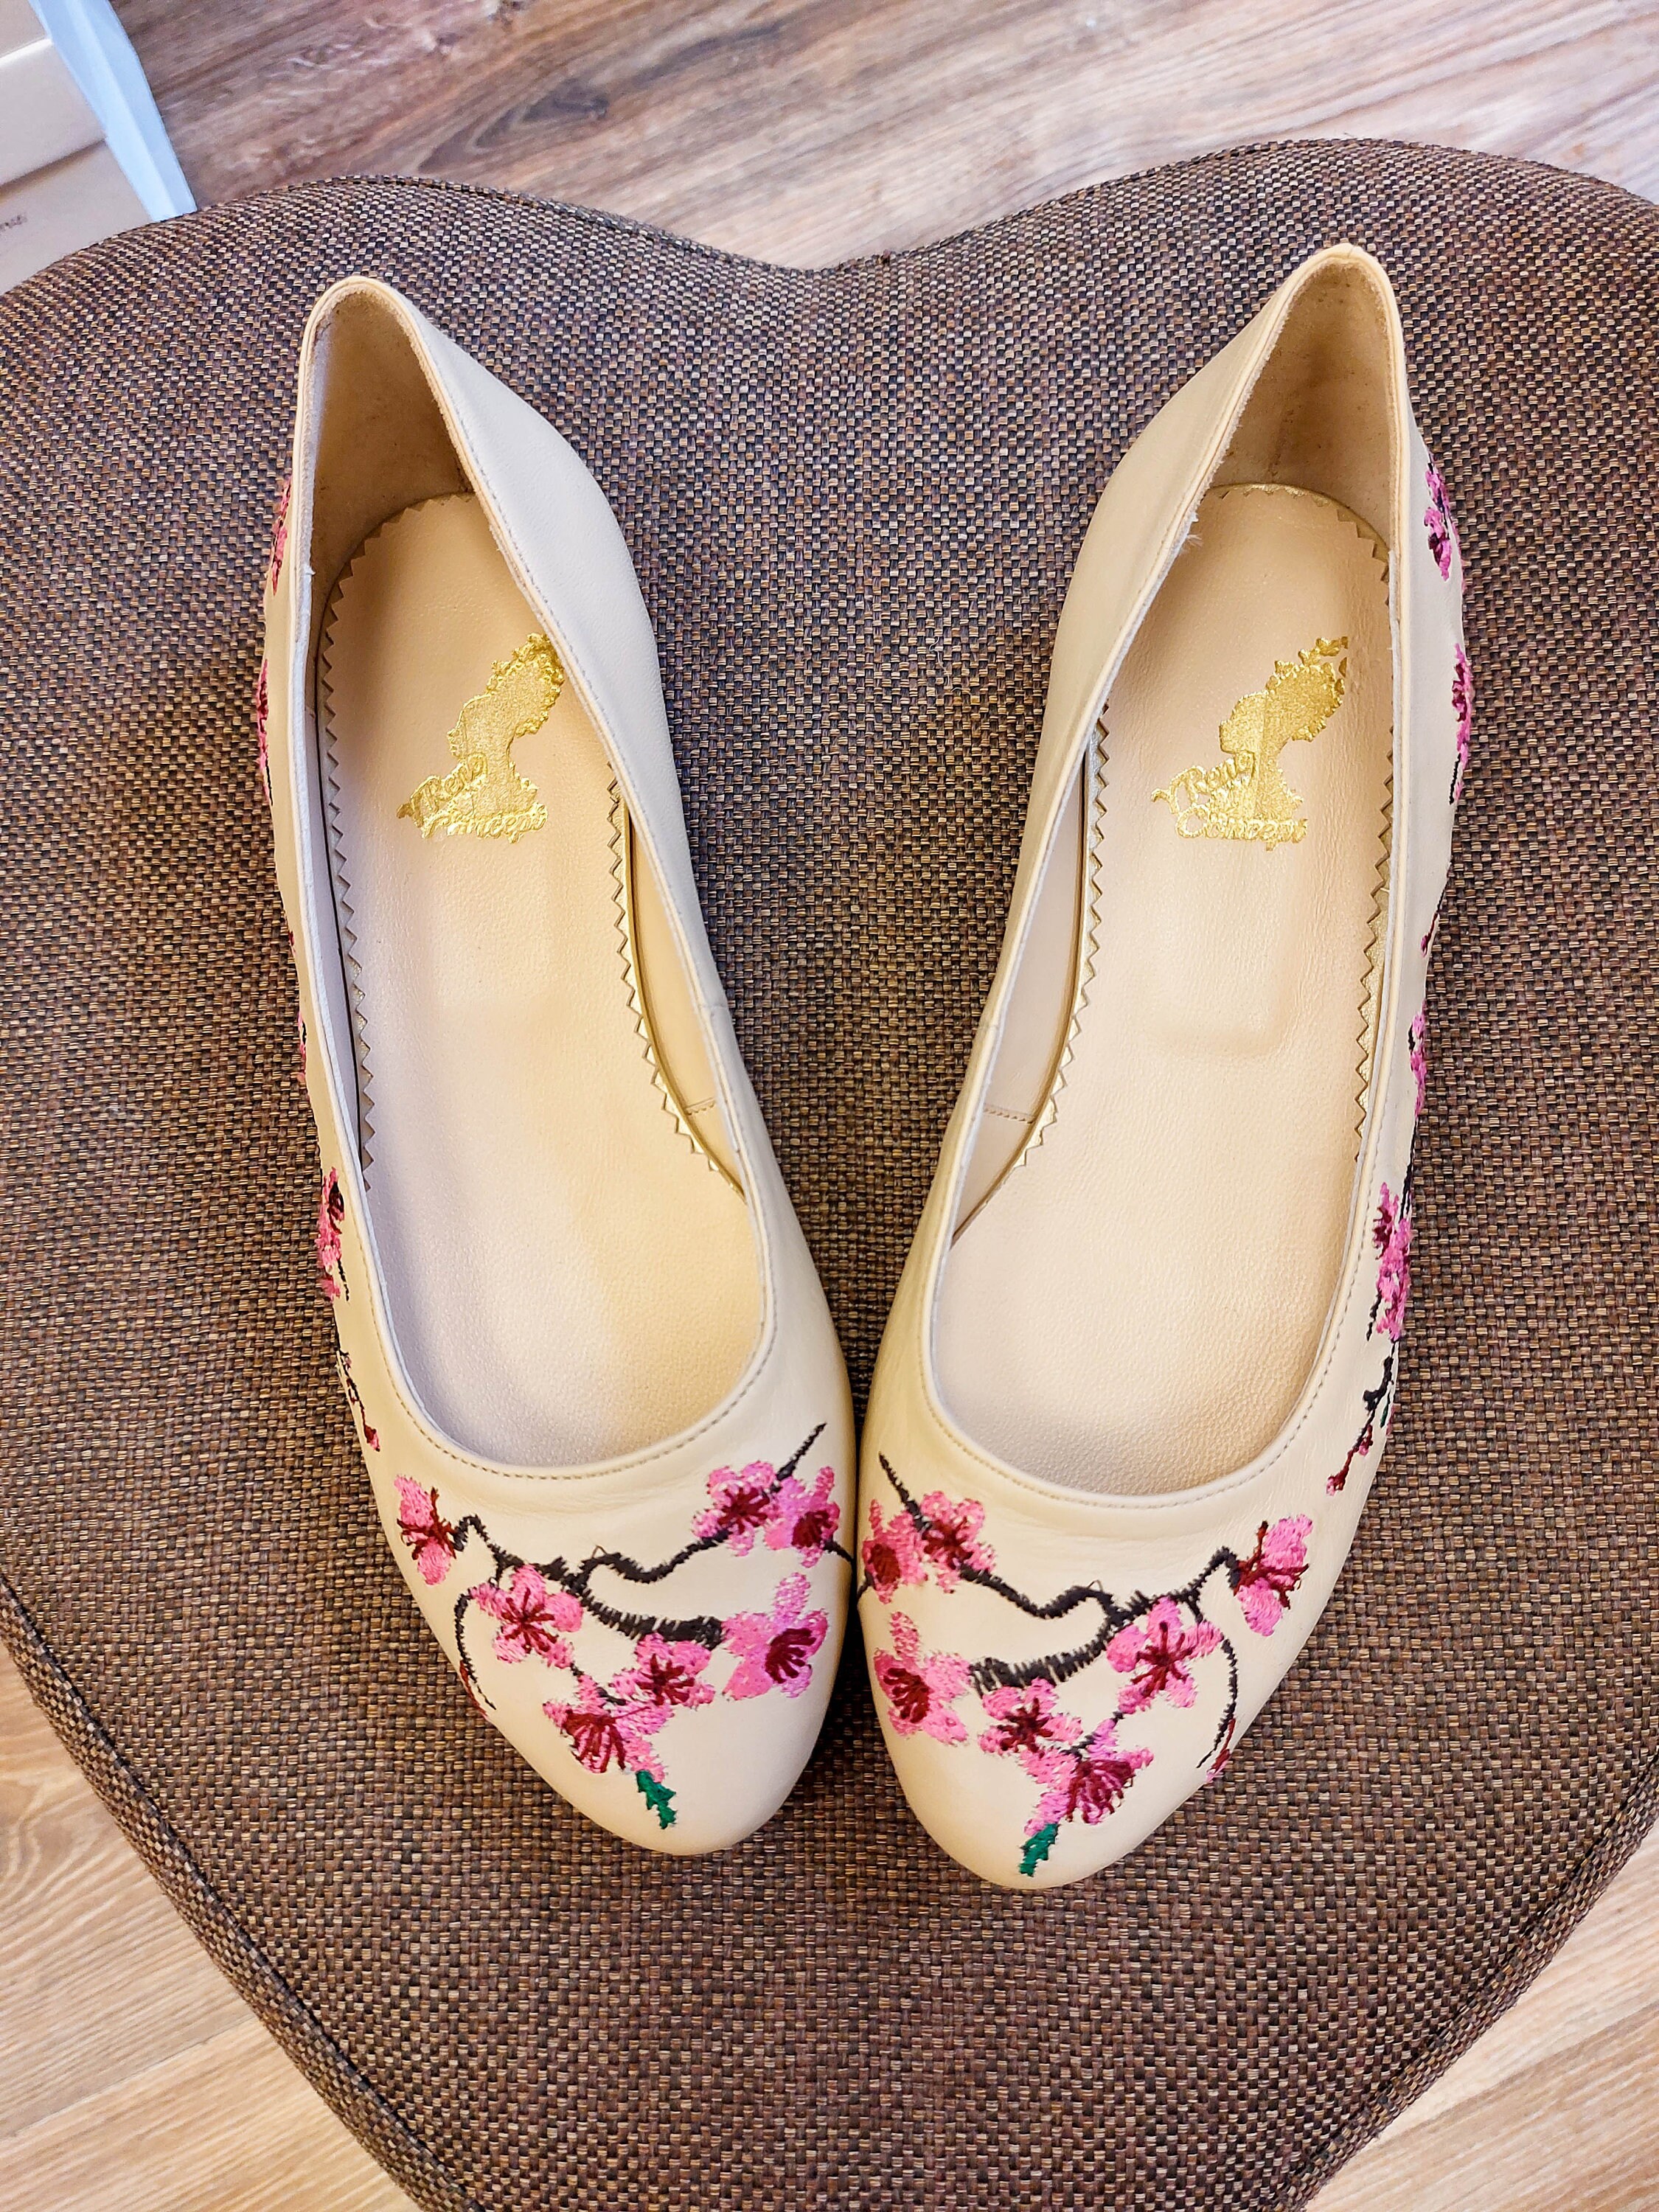 Schoenen damesschoenen Instappers Balletschoenen Handmade Leather Shoes Sakura Embroidery Shoes Comfortable Flat Shoes Flat Balerinas for Women Cherry Blossom Shoes 